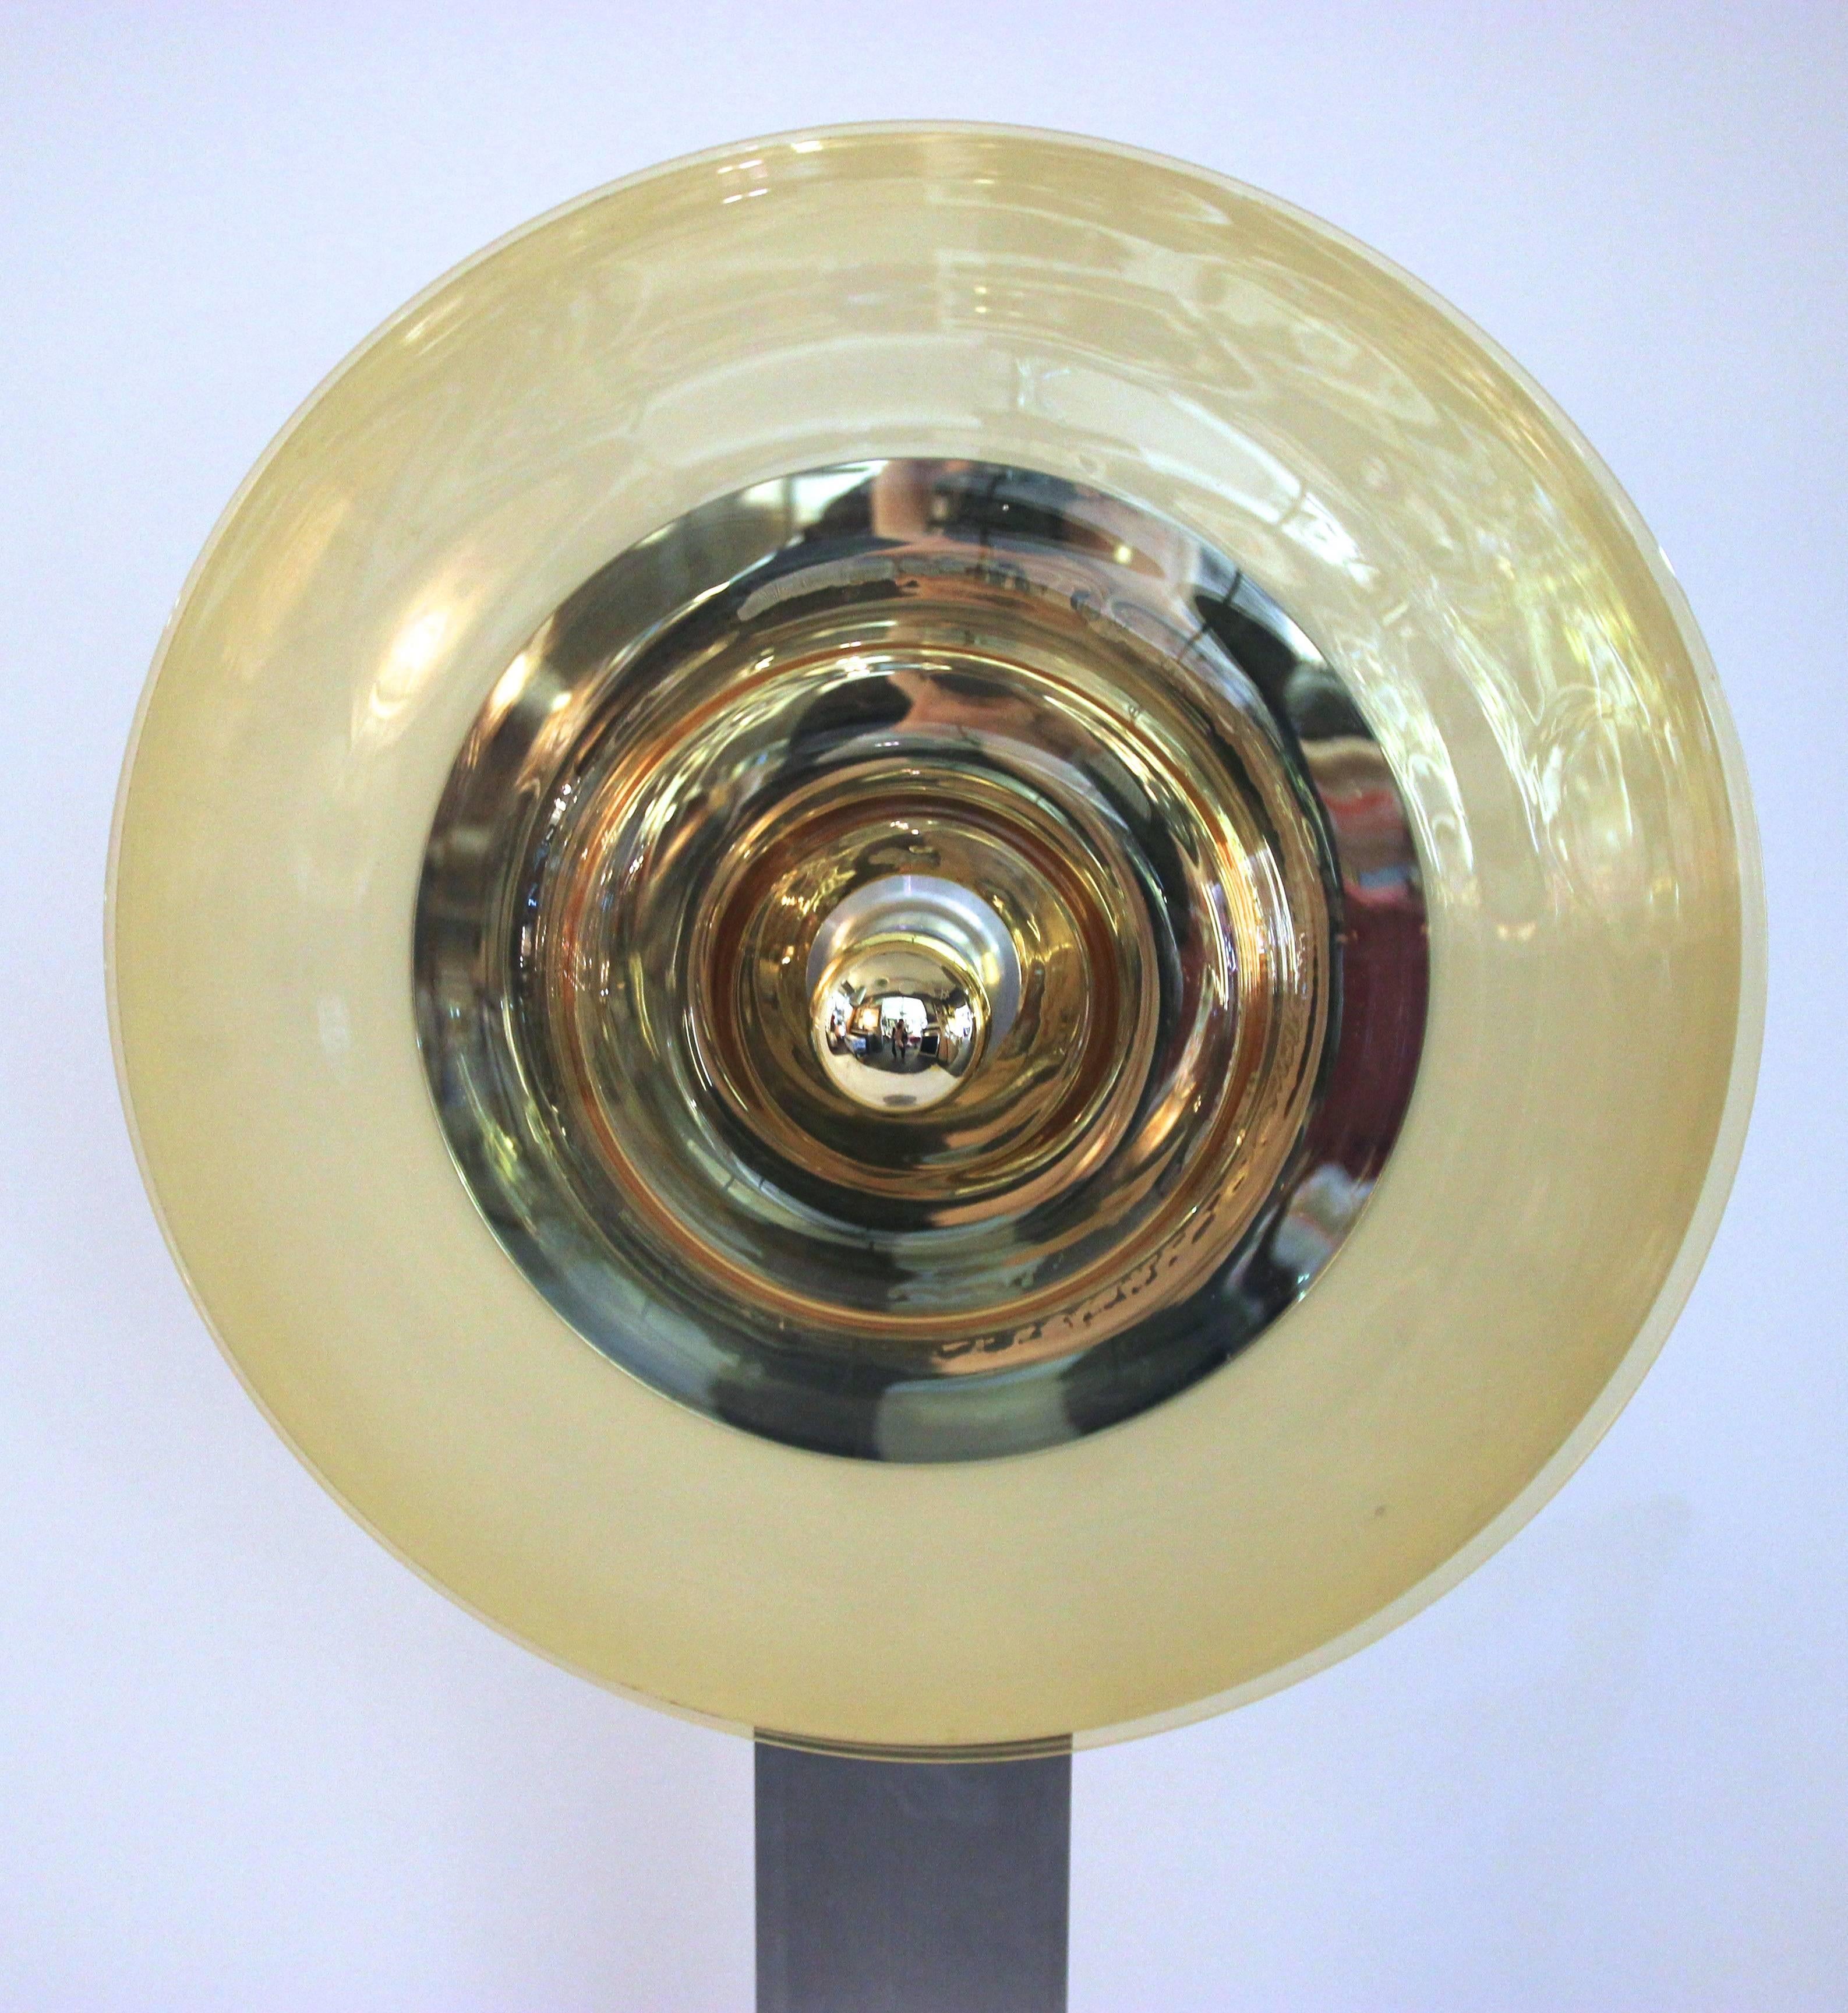 Pierre Cardin, floor lamp,
glass, lacquered metal and steel,
circa 1970, France.
Measures: Height 120 cm, diameter 60 cm,
depth 35 cm.